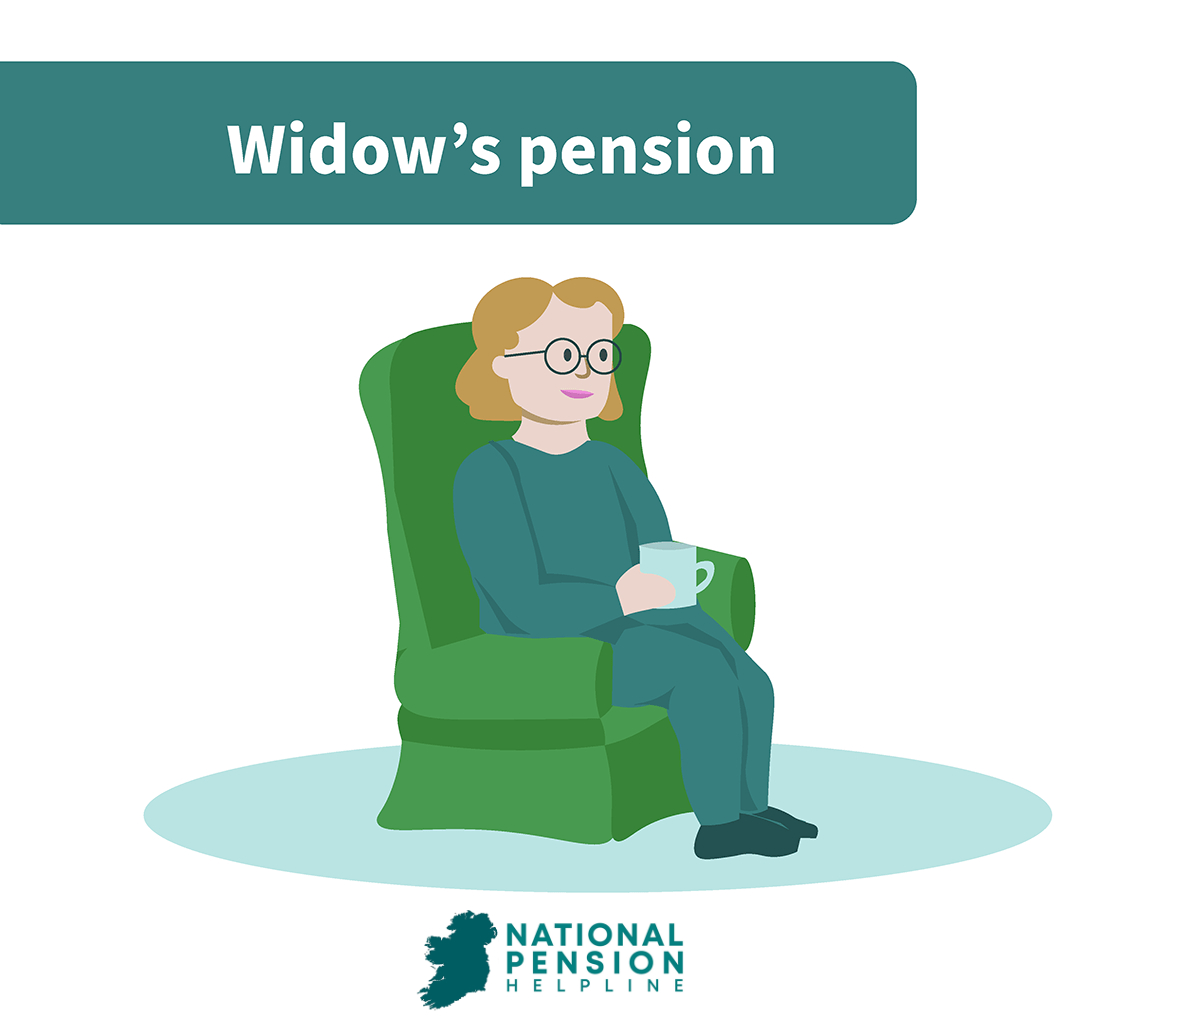 Widows Pension Ireland National Pension Helpline